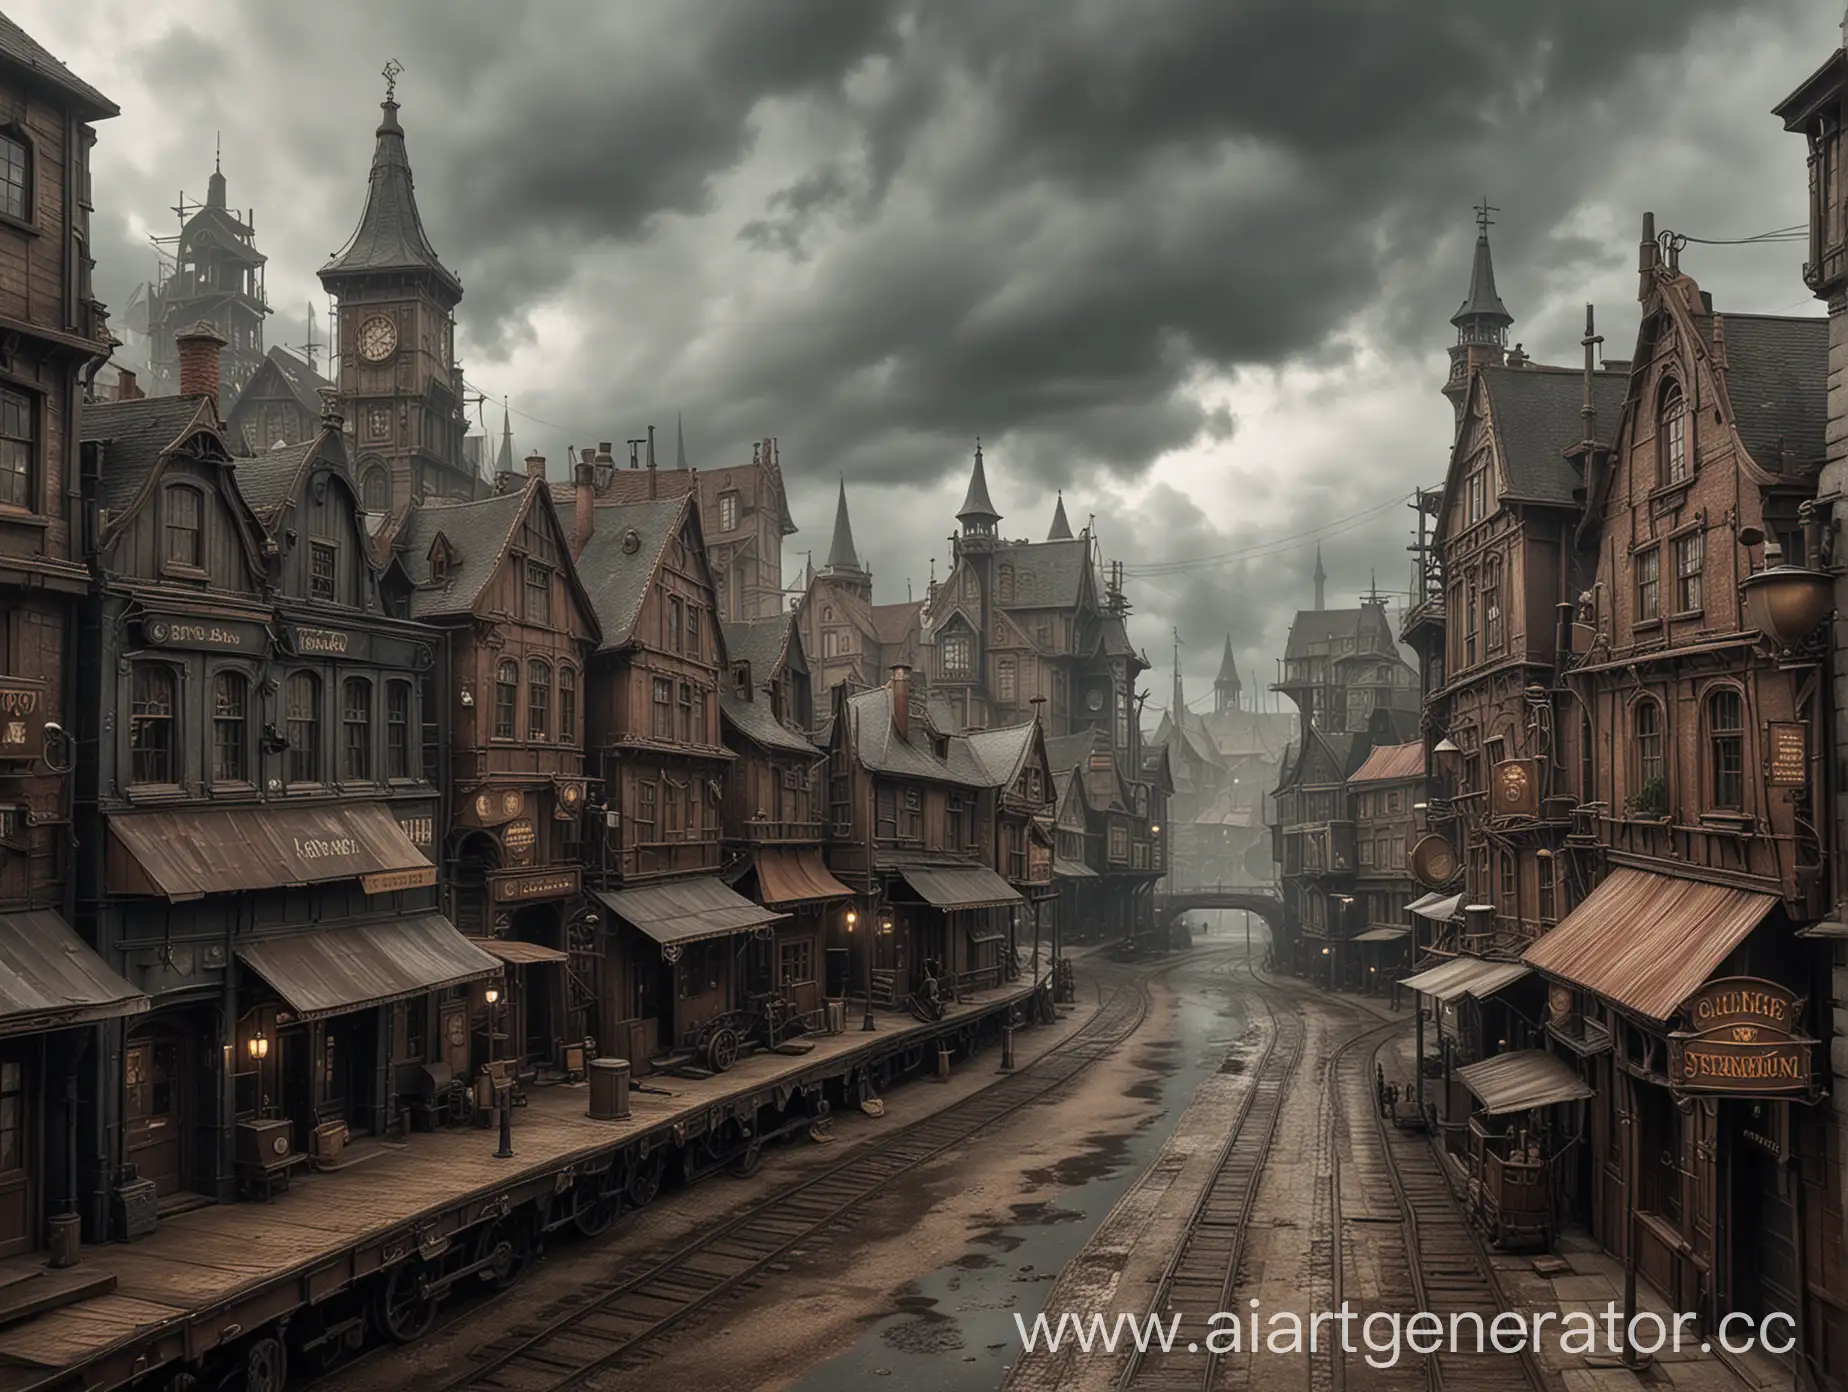 A gloomy little steampunk town